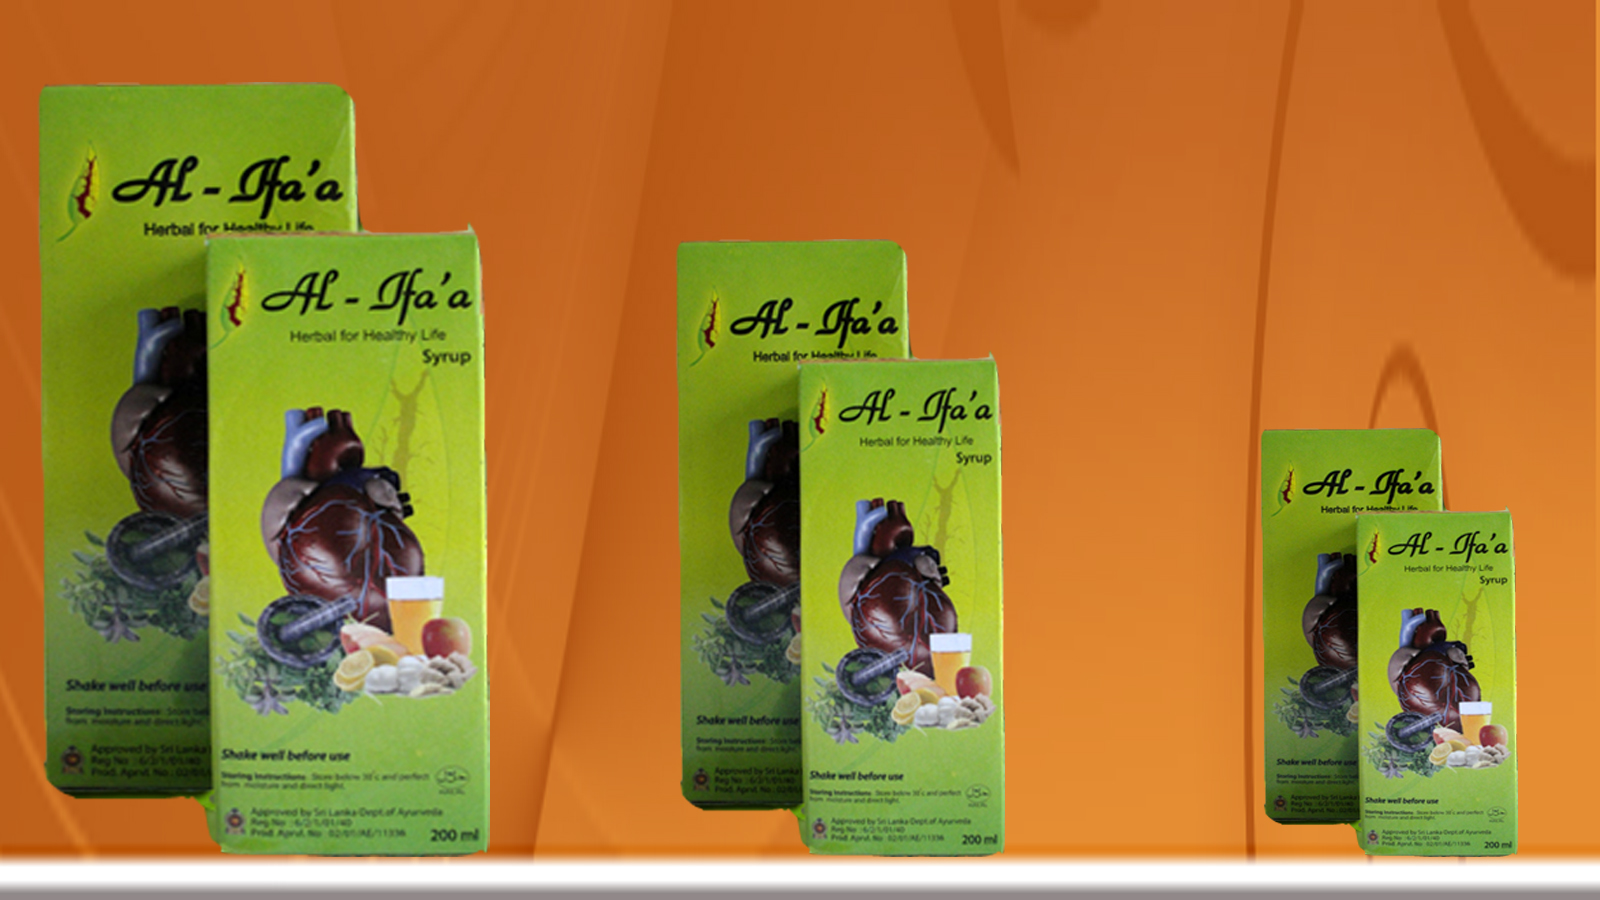 Al-Ifa's Herbal Products Private Ltd